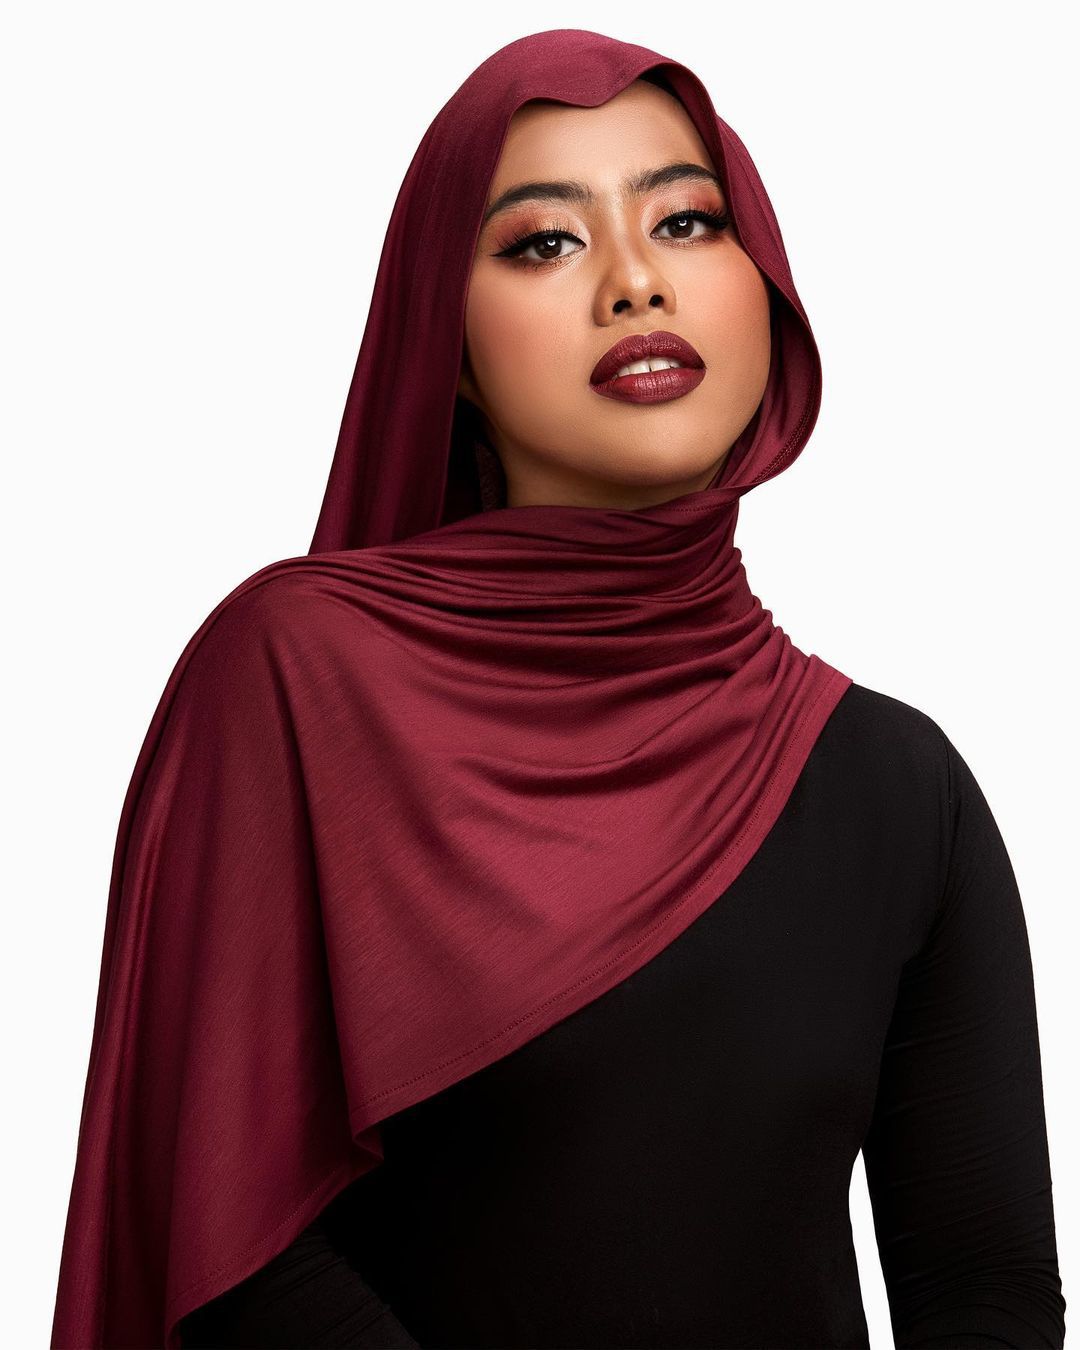 Warna Jilbab Lebaran Untuk Kulit Sawo Matang - Merah Maroon